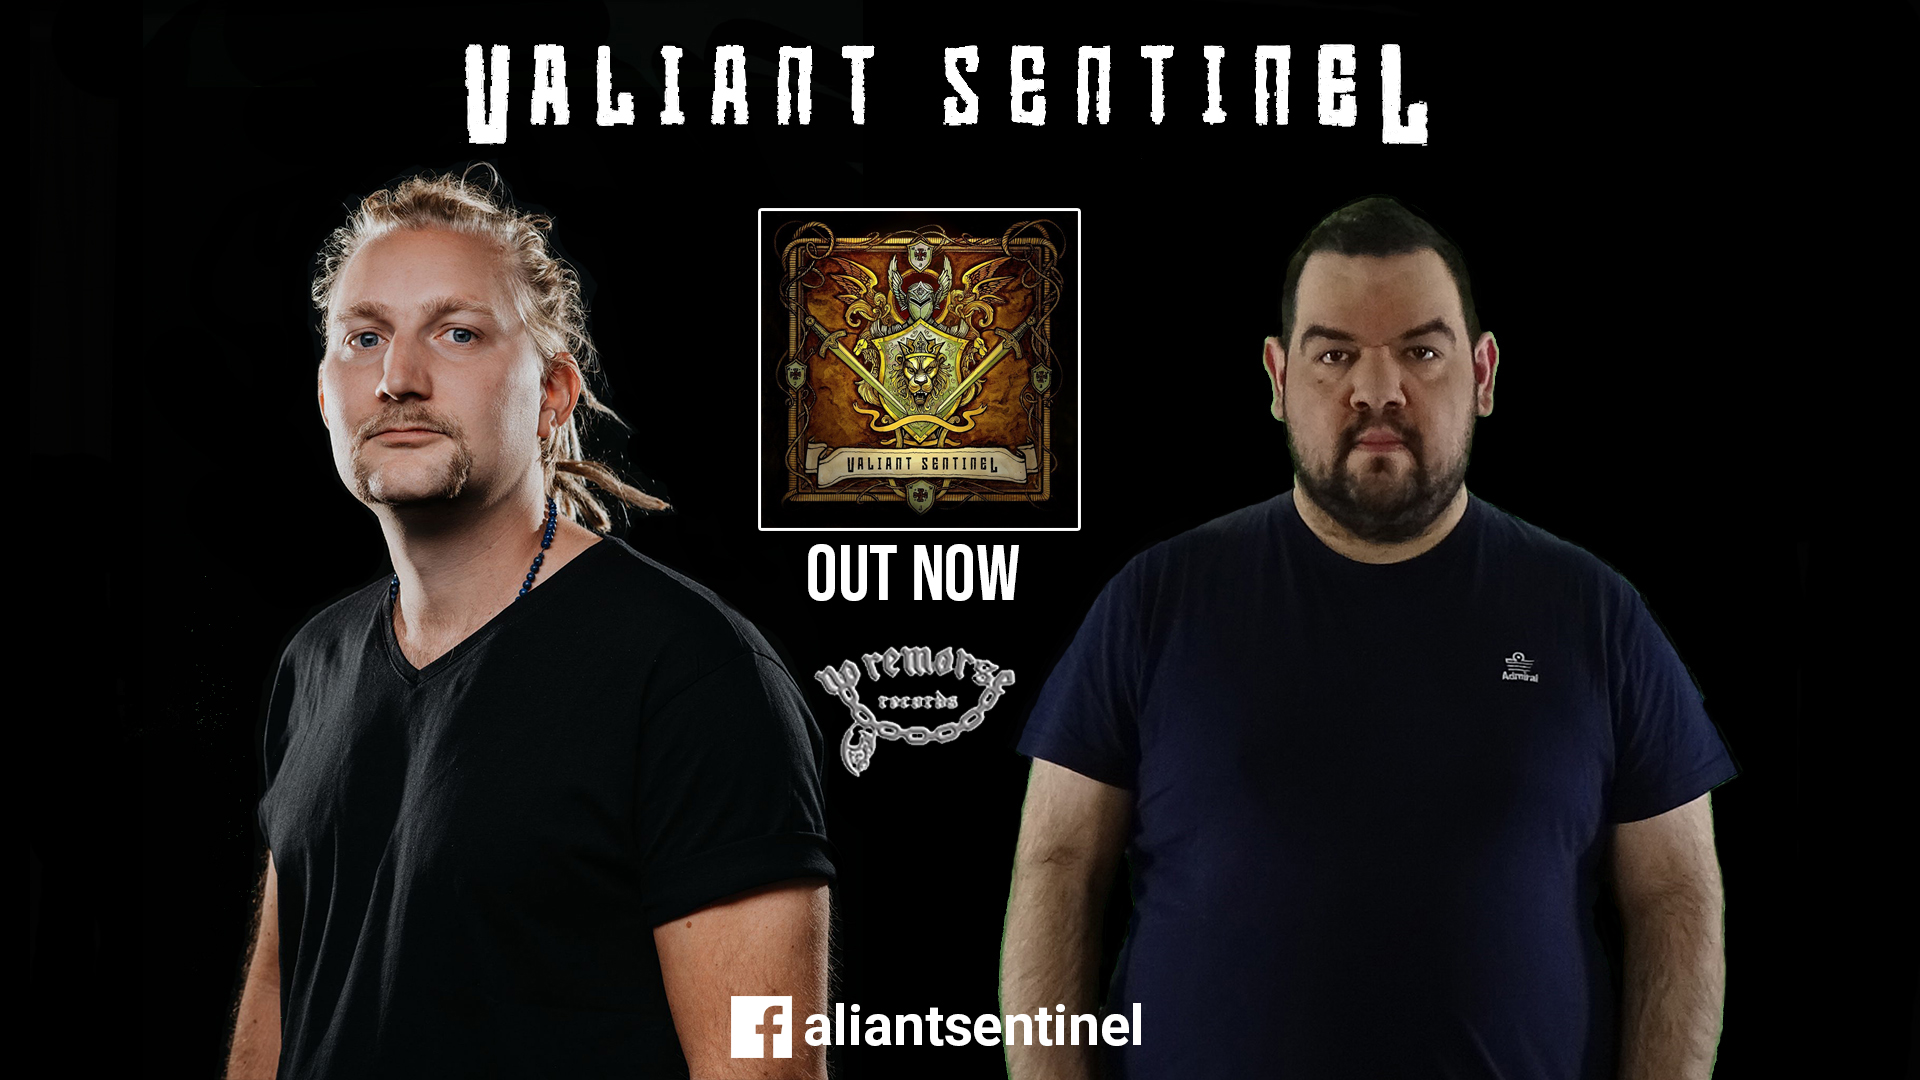 VALIANT SENTINEL – single Forelorn (feat. Fabio Lione) από το άλμπουμ “Valiant Sentinel”